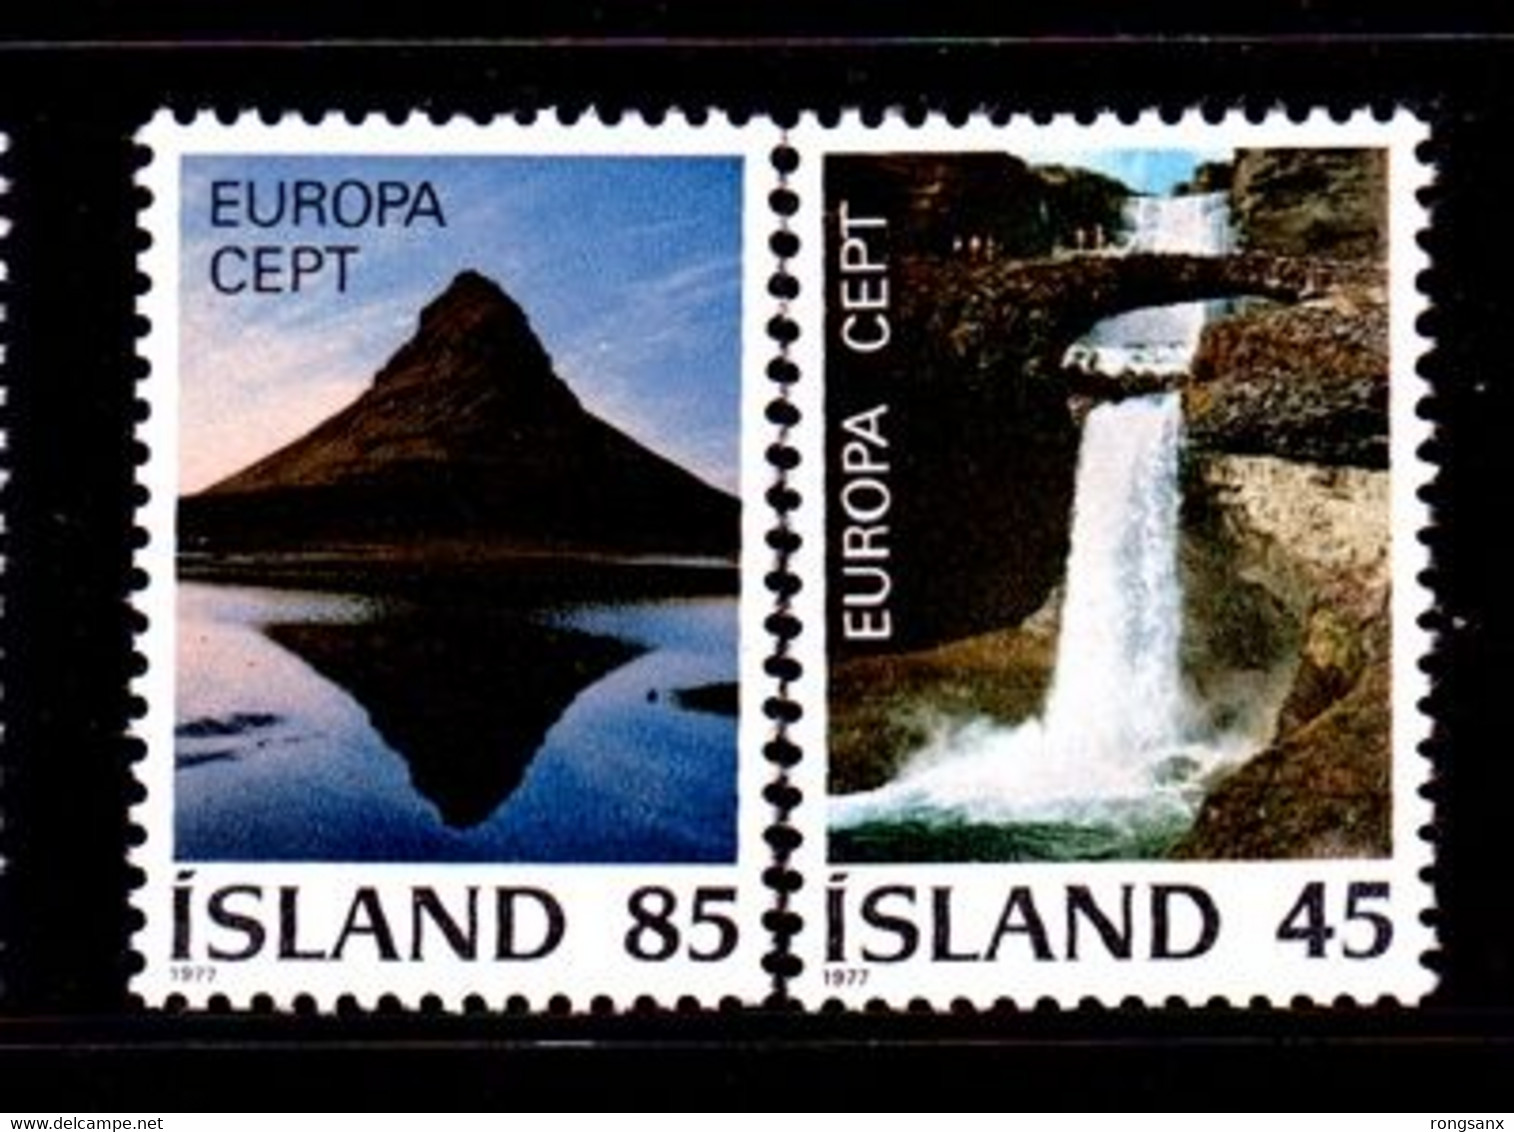 1977 ICELAND EUROPA WATERFALL ISLAND STAMP 2V - Neufs